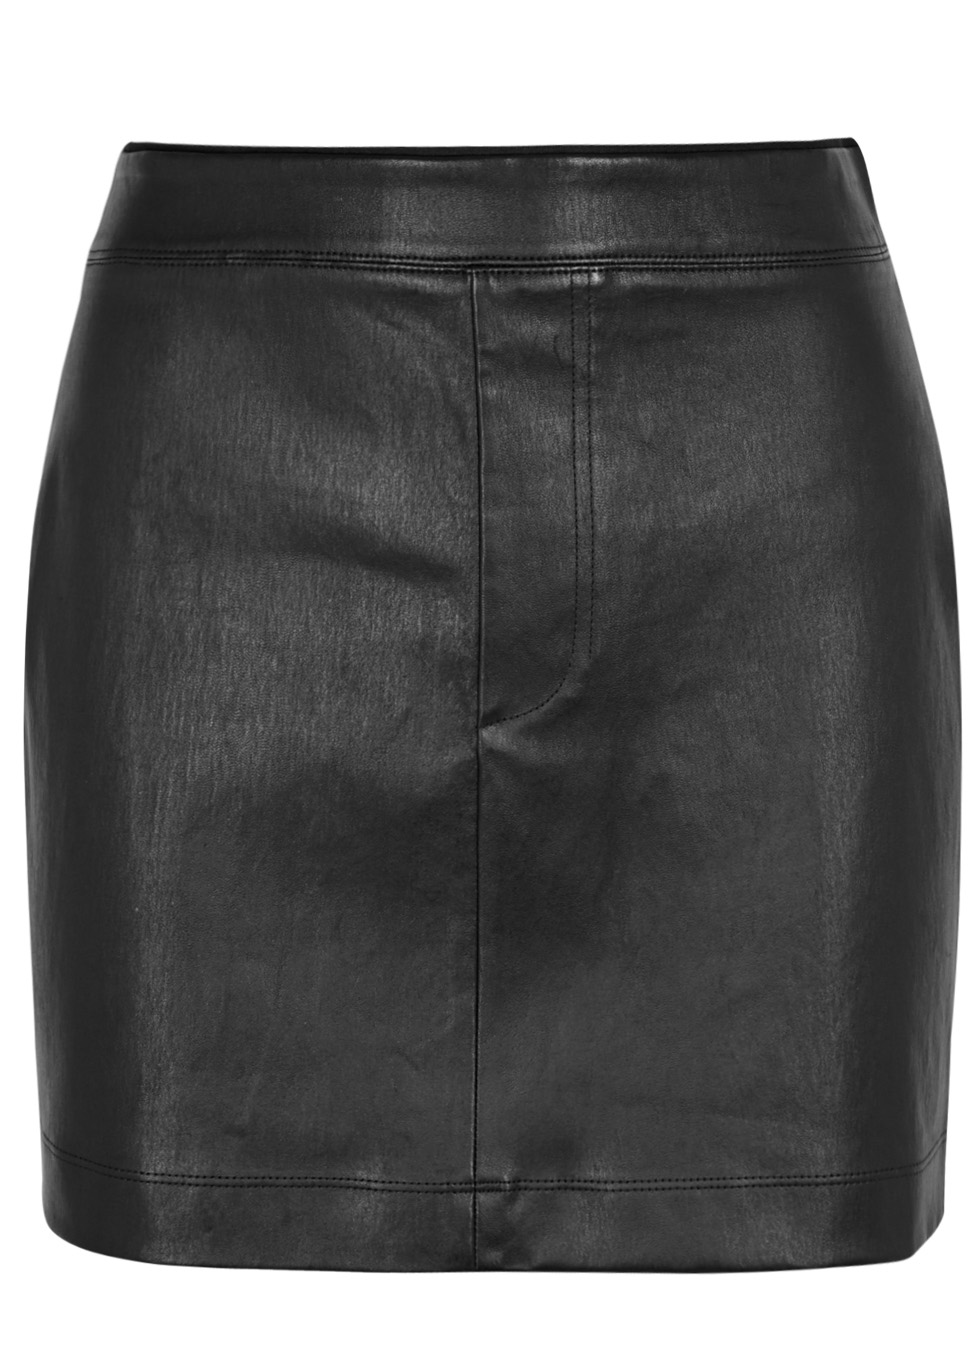 Helmut Lang Black leather mini skirt - Harvey Nichols